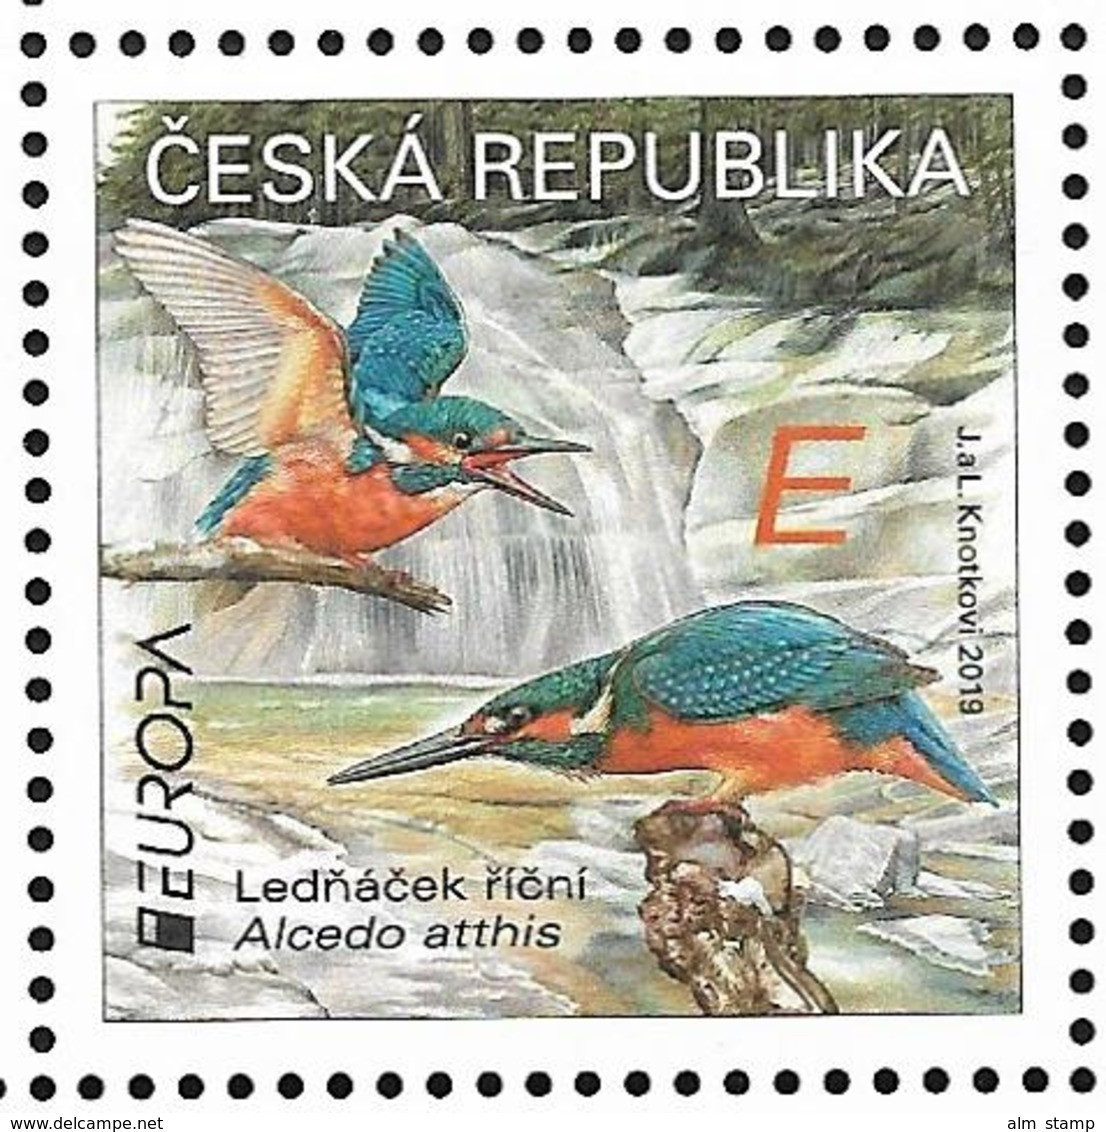 2019  Ceska Rep. Tschechische Rep. Mi. 1024**MNH     EUROPA  -NATIONAL BIRDS - 2019